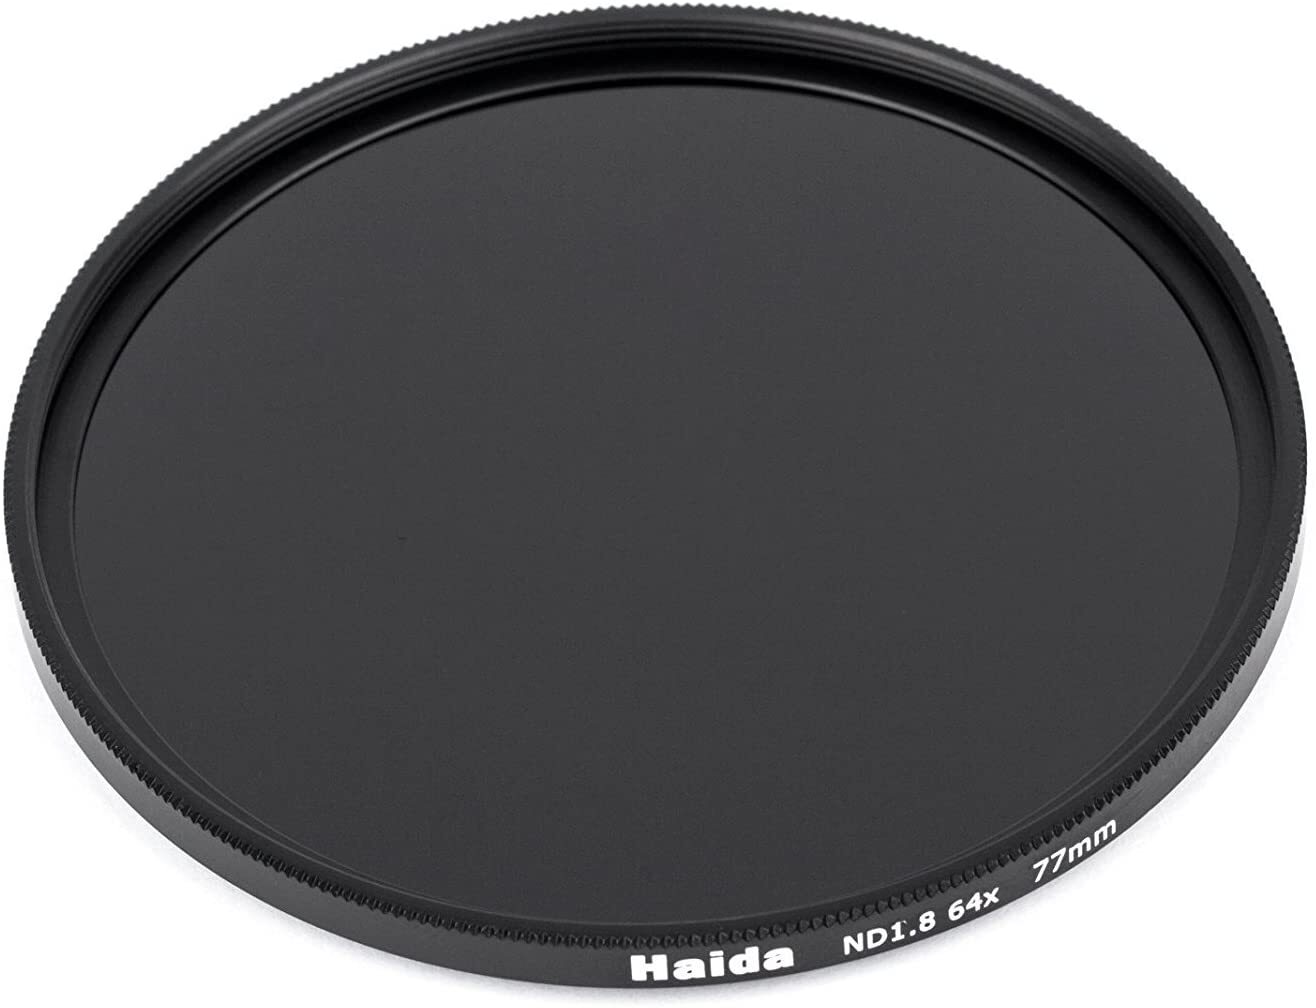 Haida Classic Round ND 1.8 (64x) Filter - 6 Stop